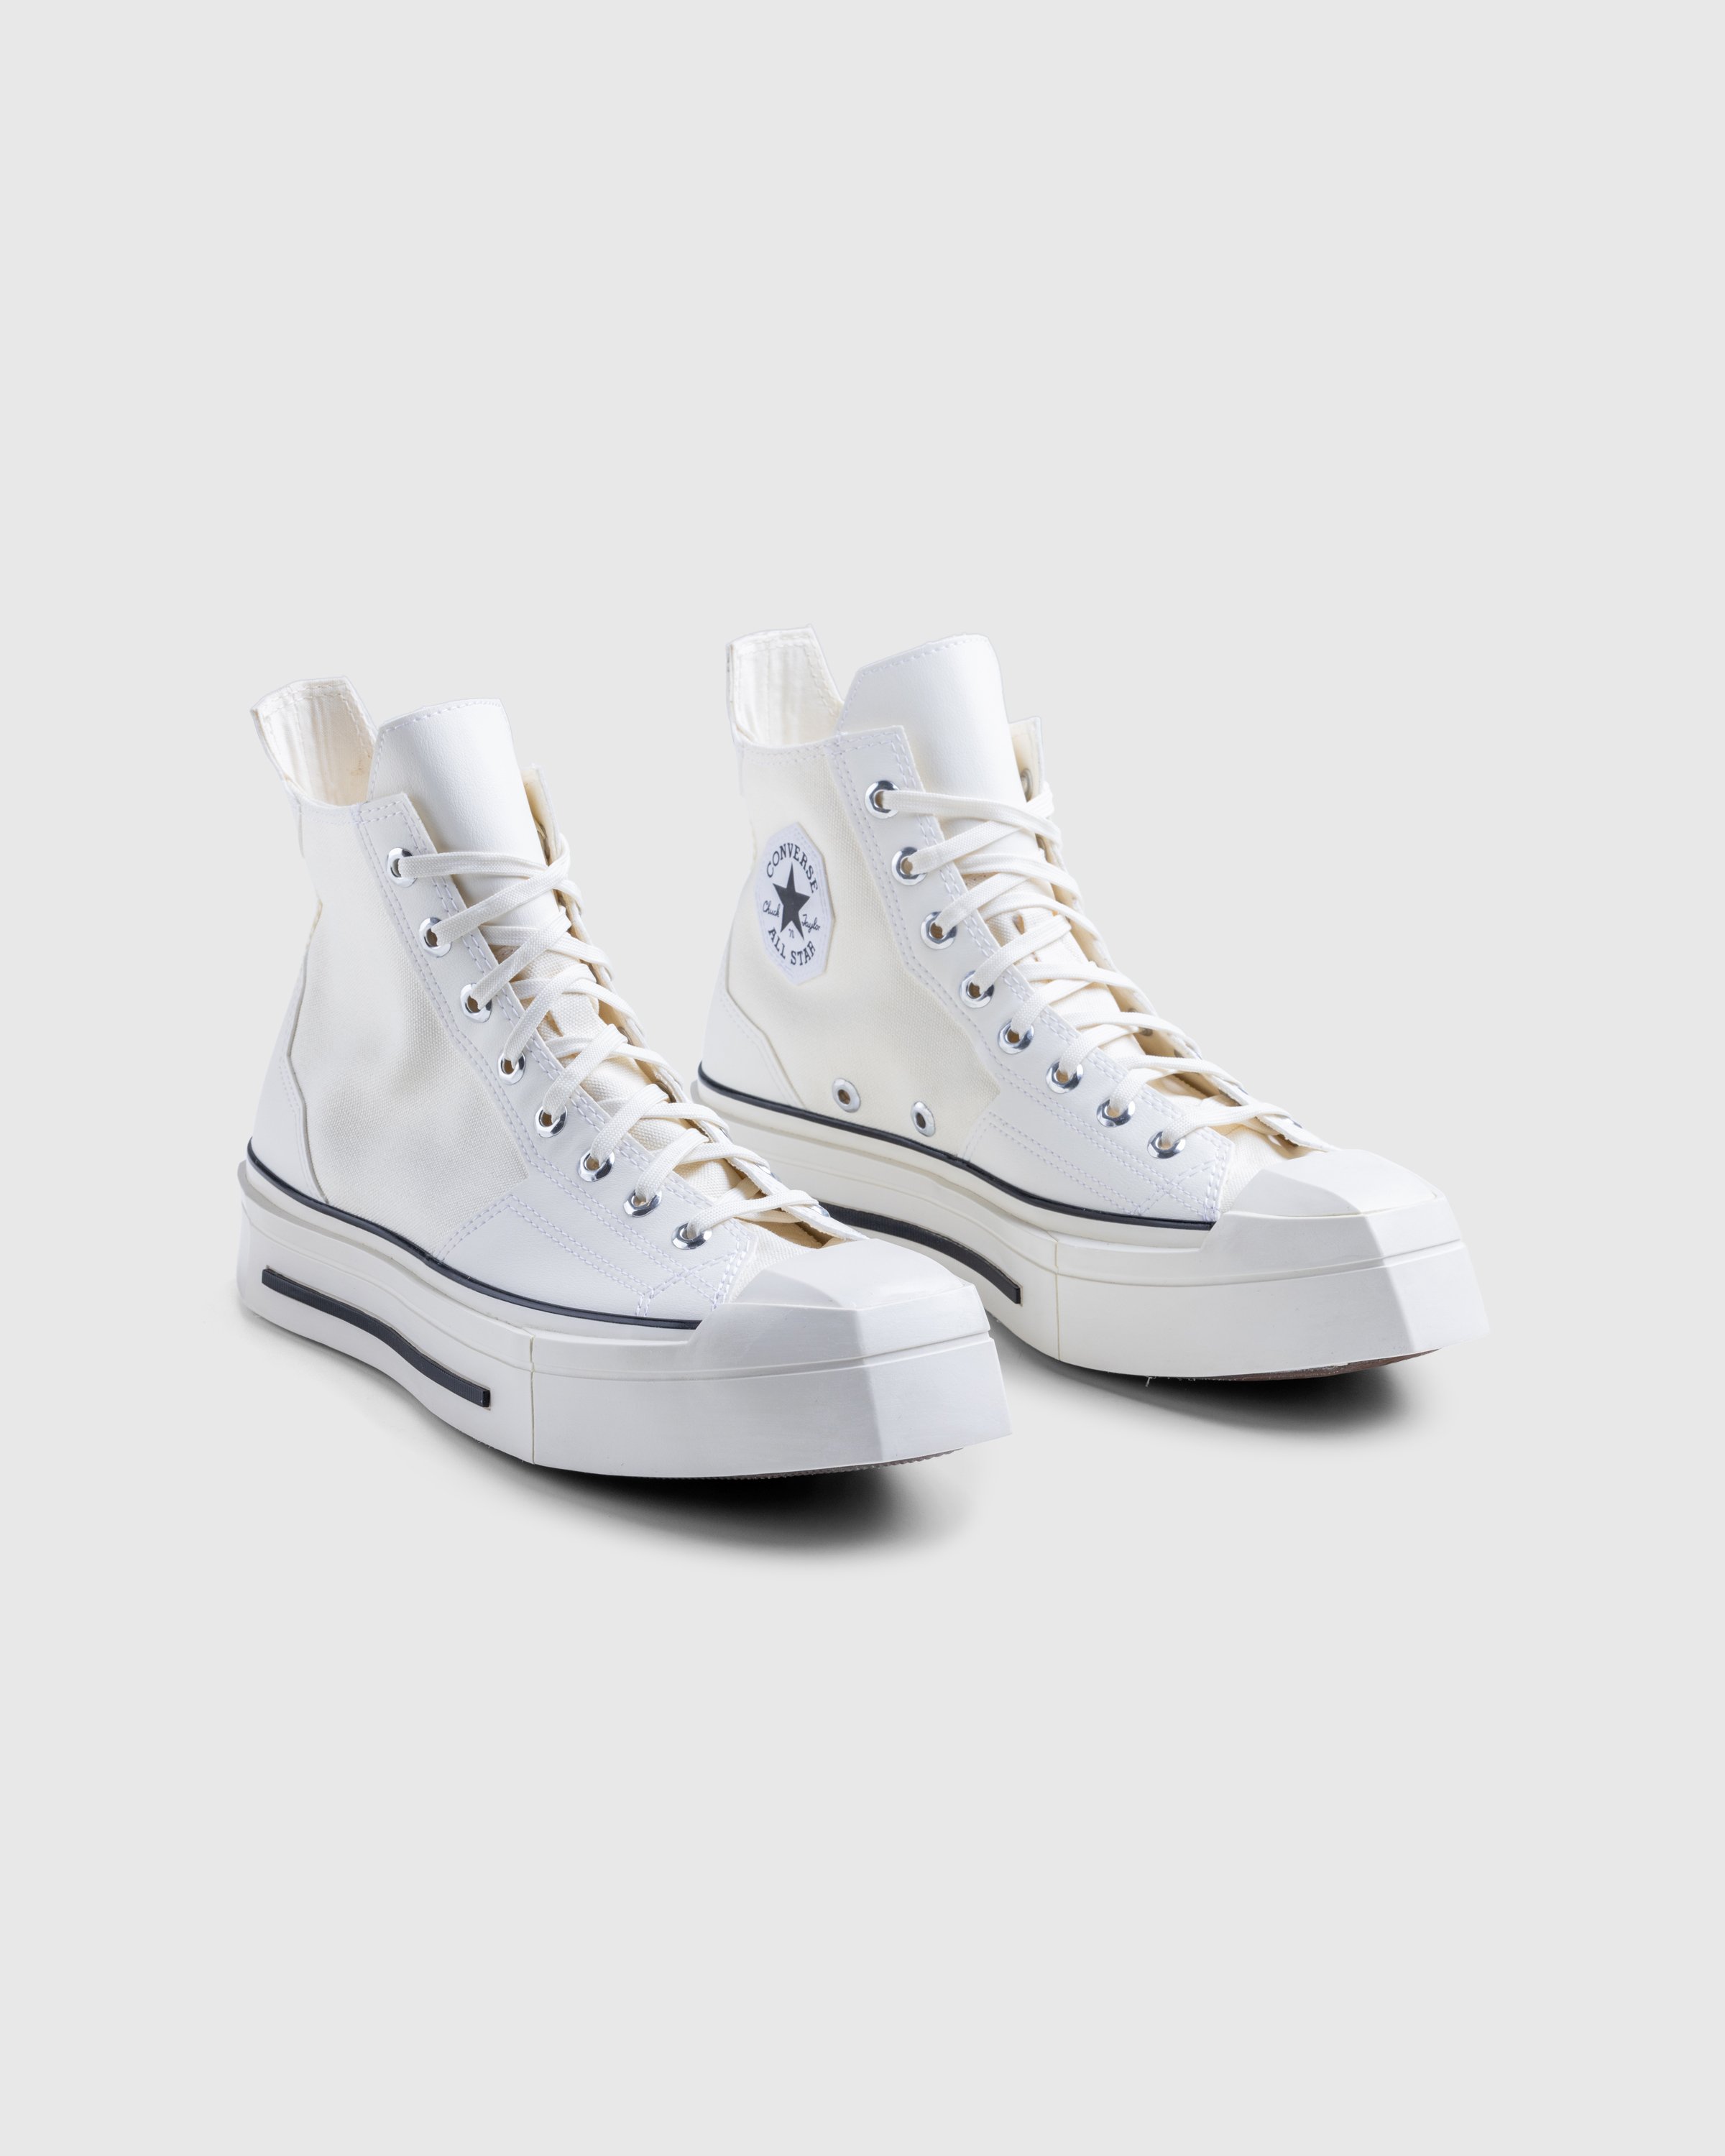 Converse - CHUCK 70 DE LUXE SQUARED HI EGRET/BLACK - Footwear - White - Image 3